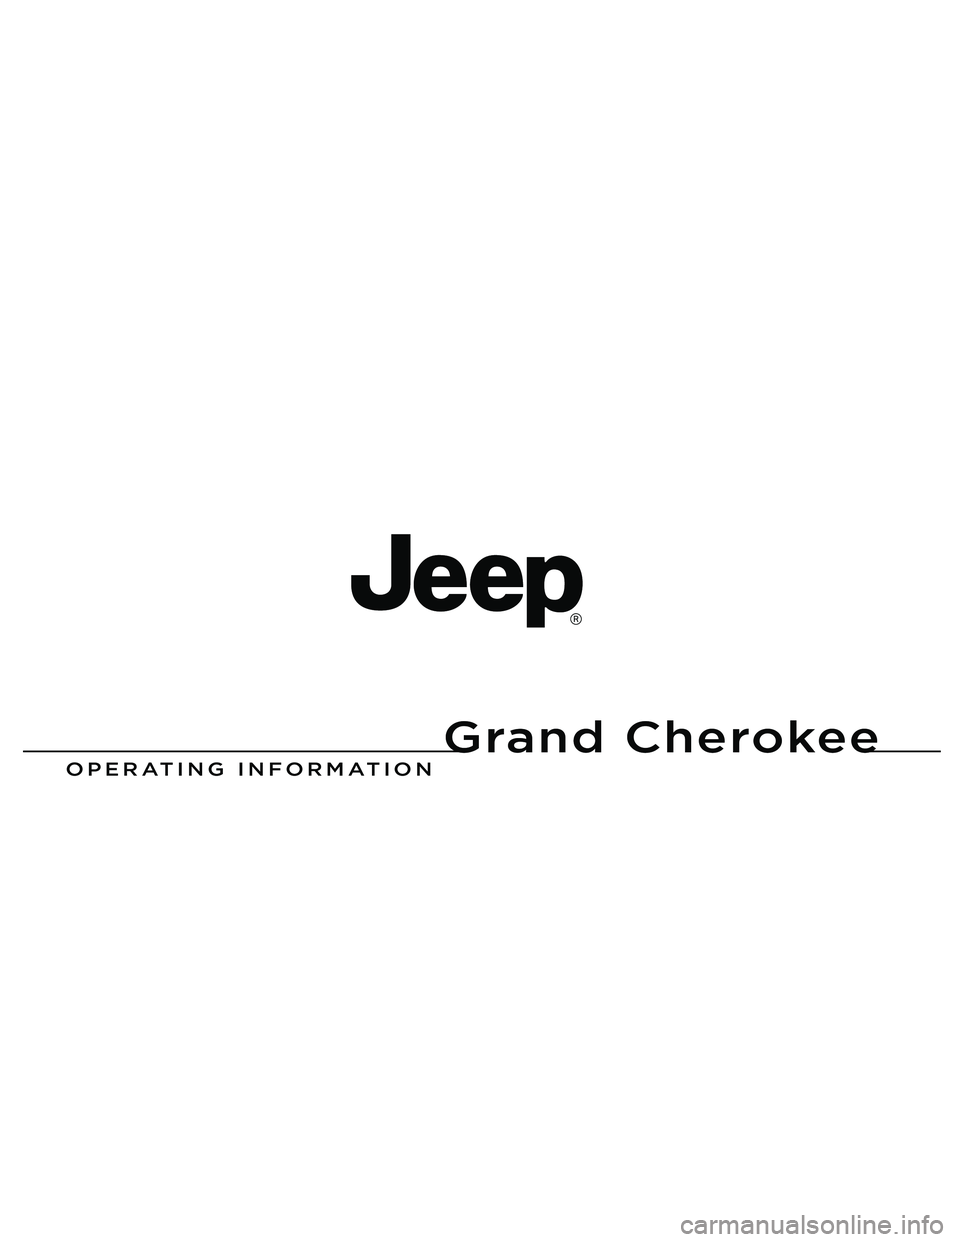 JEEP GRAND CHEROKEE 2011  Owner handbook (in English) Grand Cherokee
Chrysler Group LLC
OPERATING IN\fORMATION
Grand Cherokee
13WK741-126-ENG-ABPrinted in Europe 13
1386316_EE_Jeep_Gr_Cherokee_OM.indd   1 